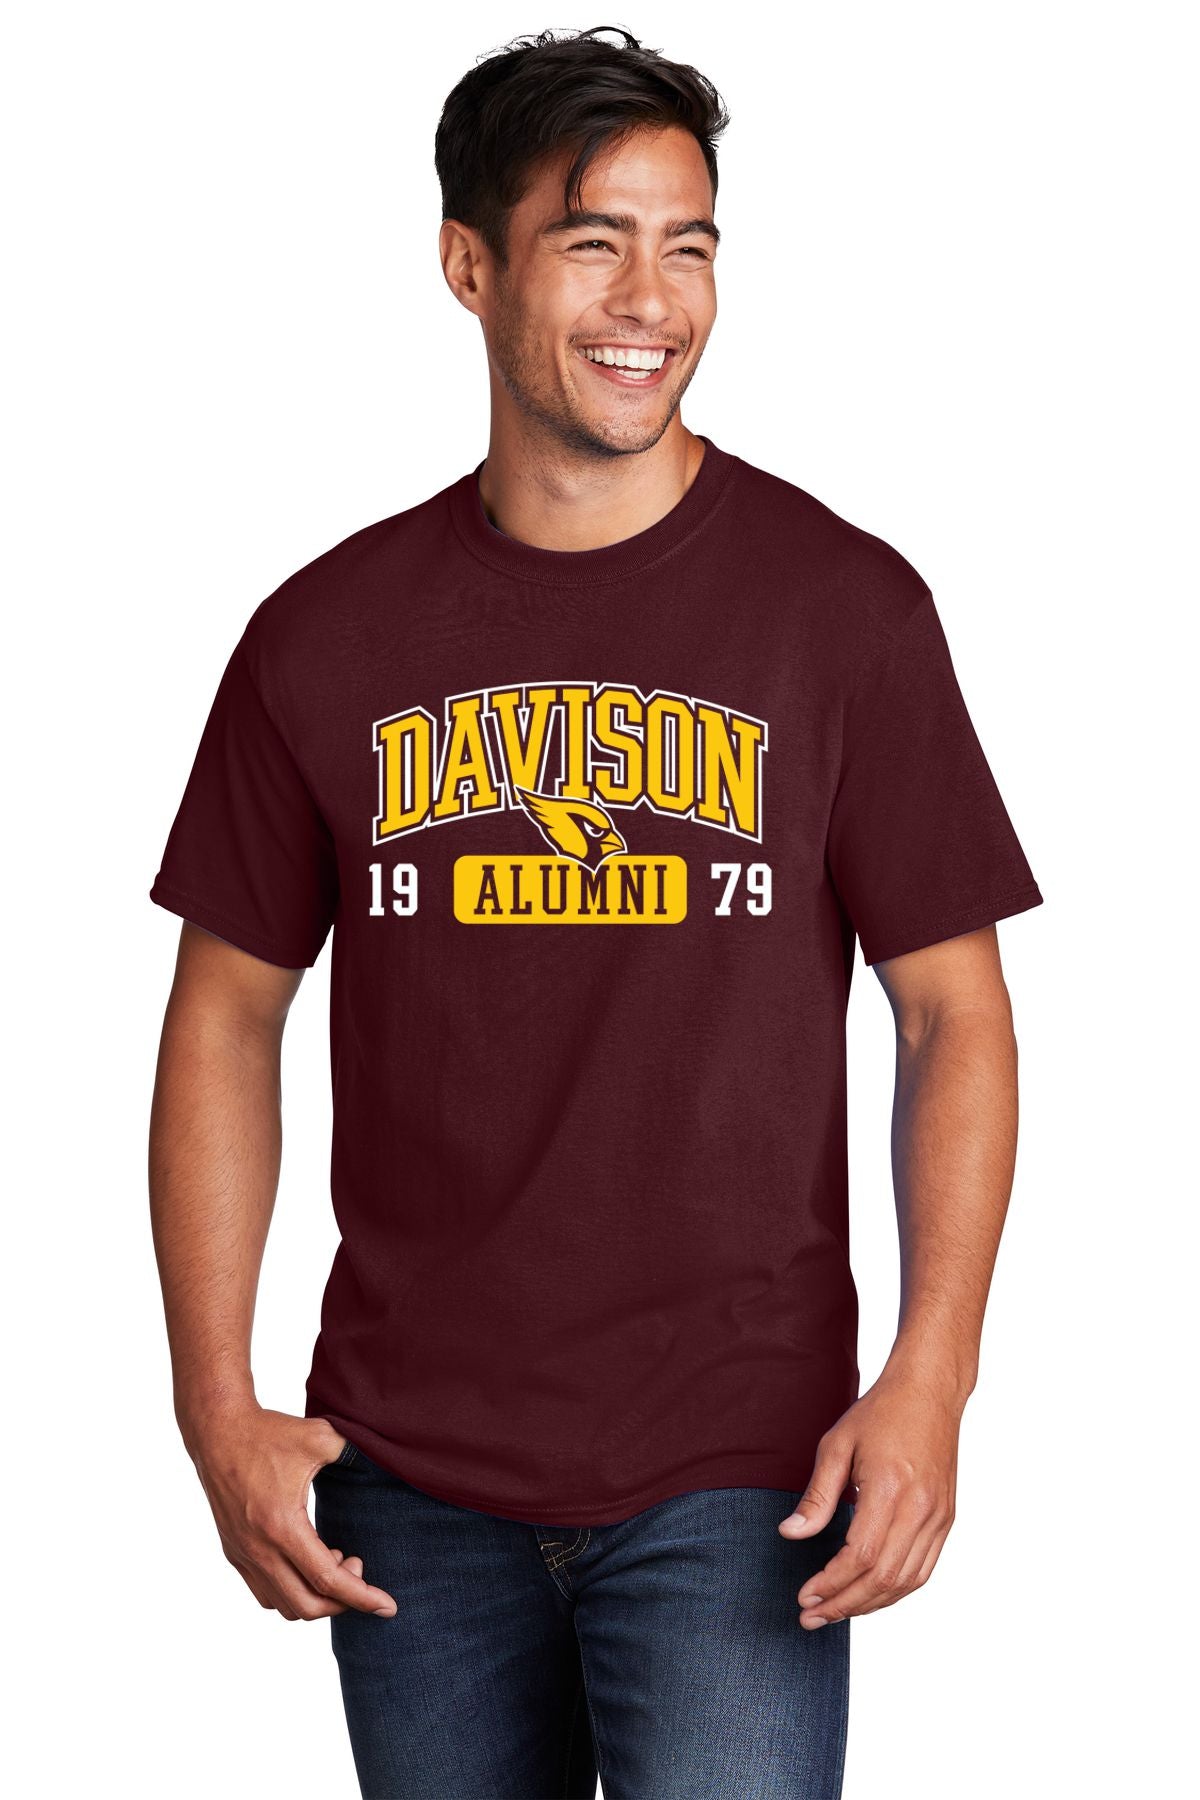 Davison Class of 79